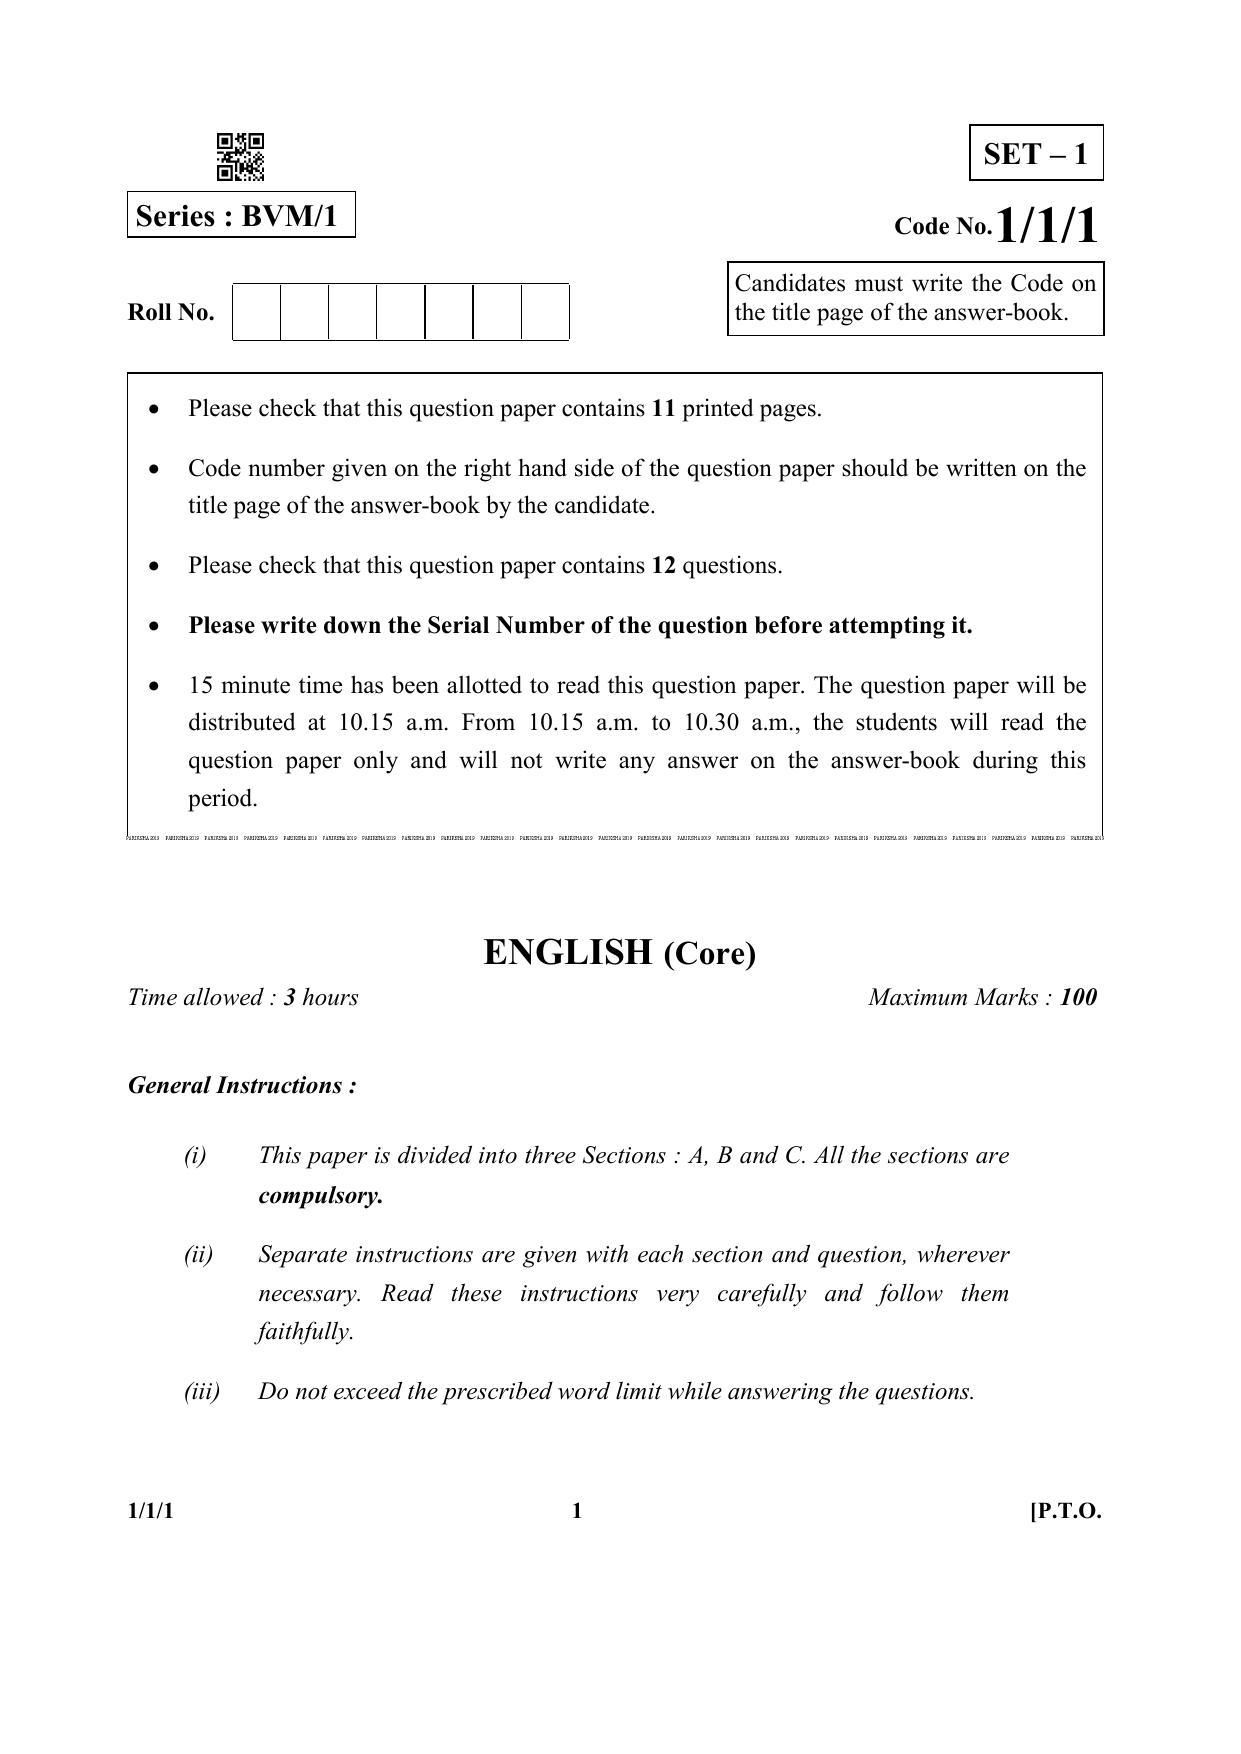 CBSE Class 12 1-1-1 (English Core) 2019 Question Paper - Page 1